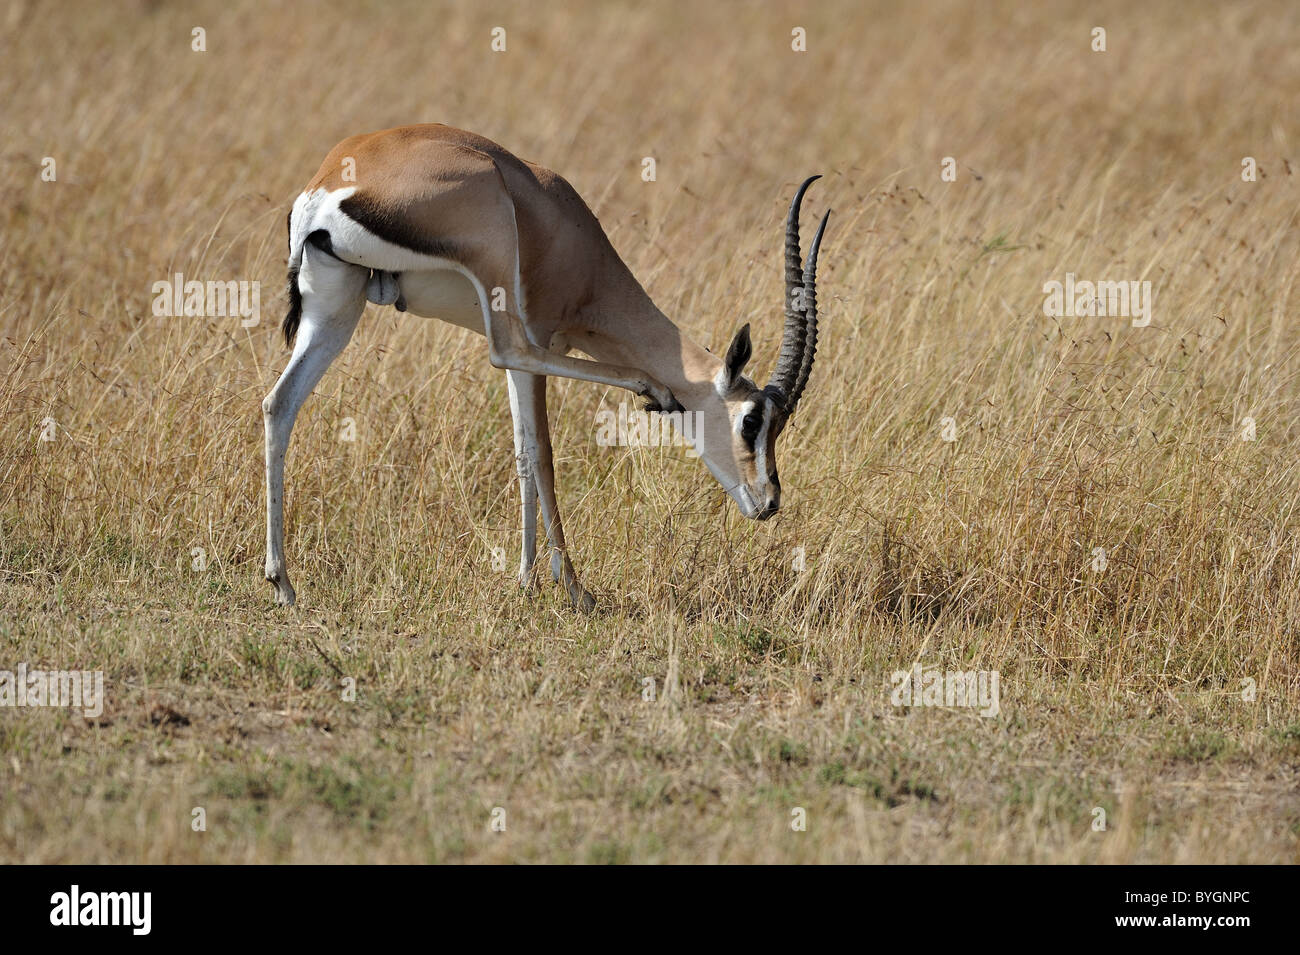 Grant's gazelle (Gazella granti - Nanger granti) scratching itself - Maasai Mara - Kenya - East Africa Stock Photo